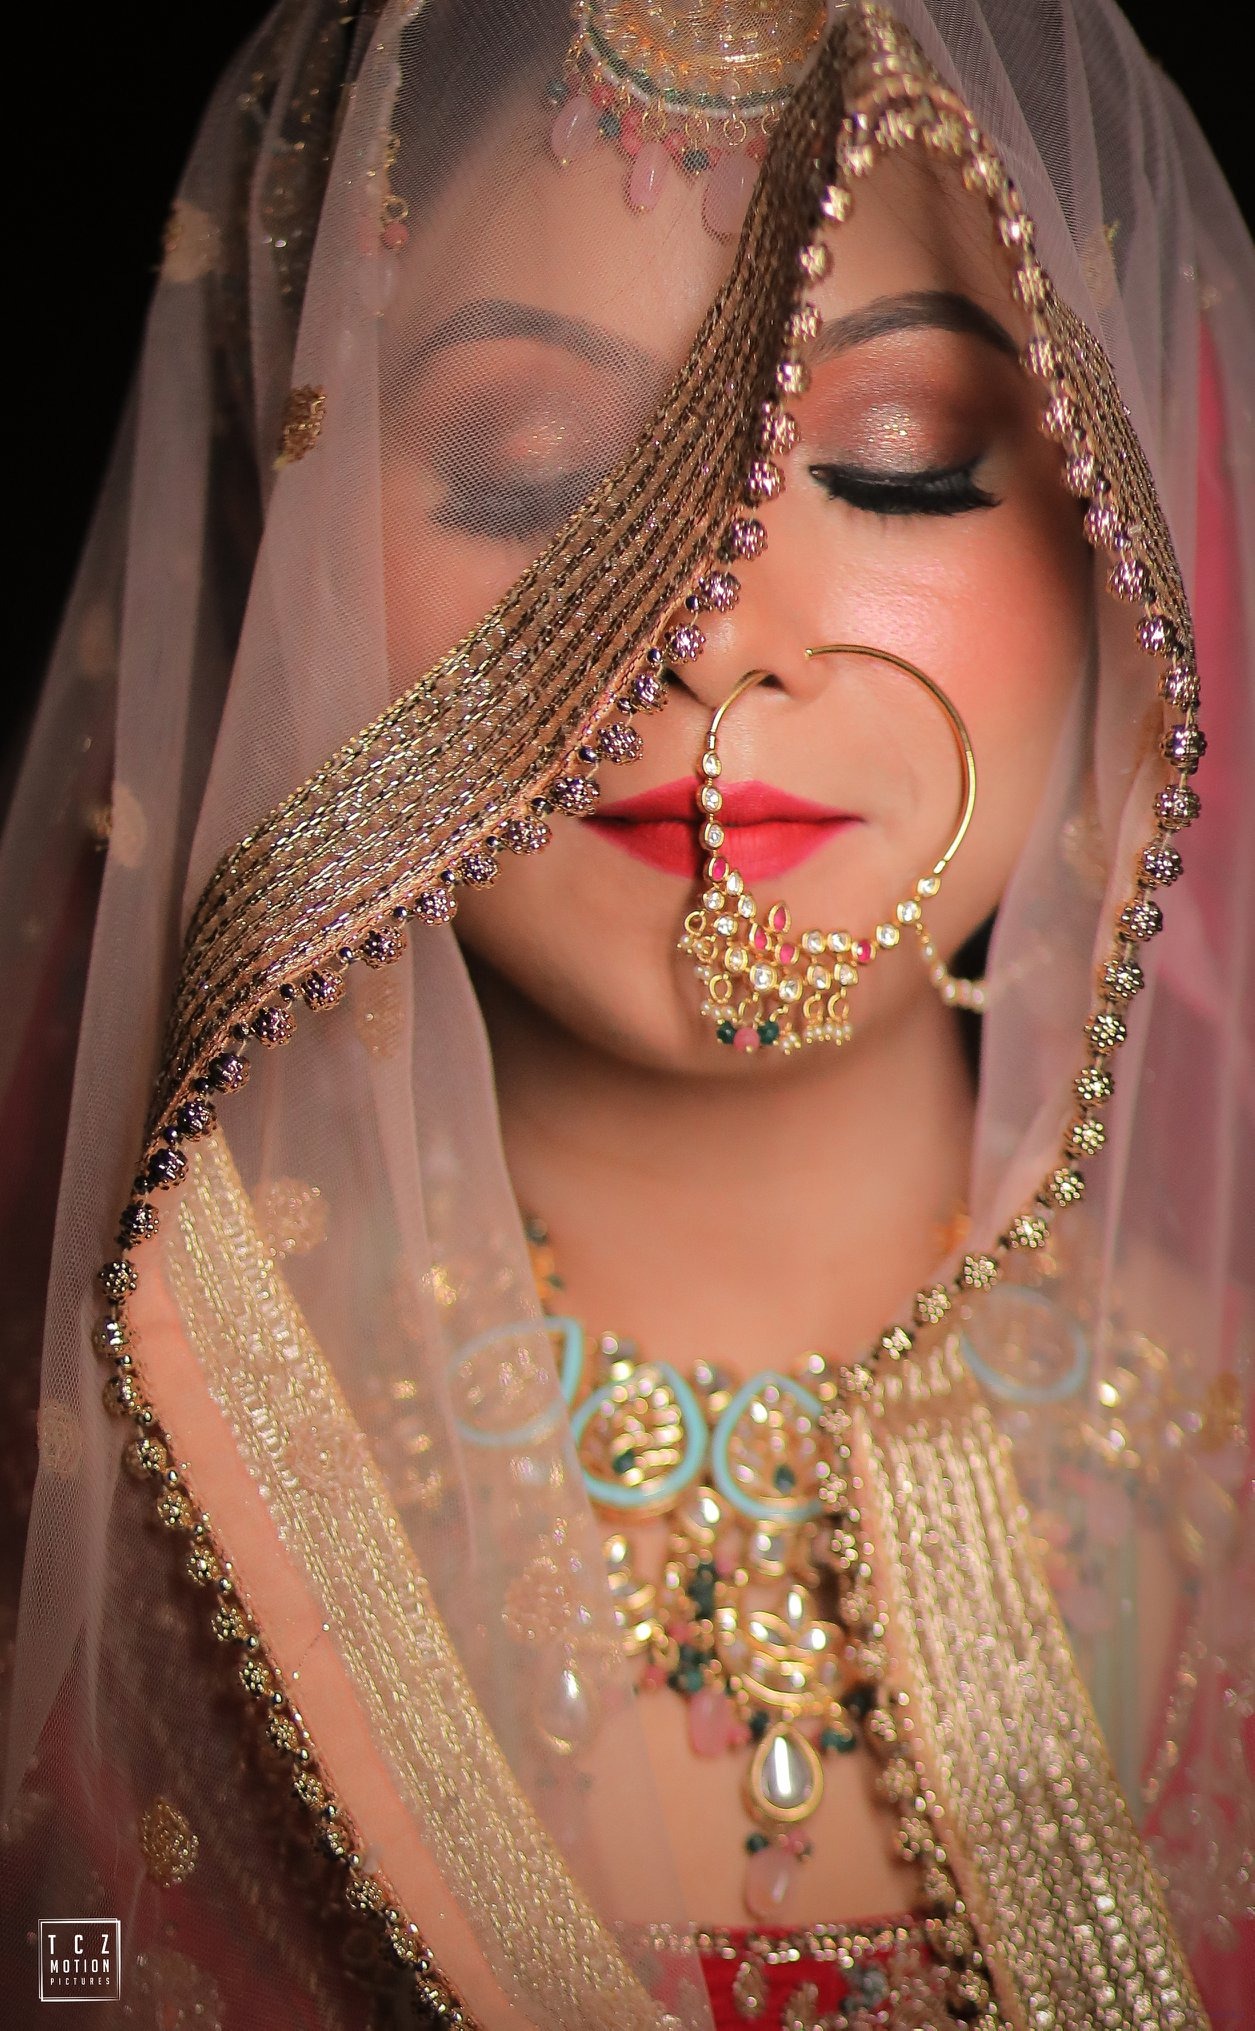 TCZ Motion Pictures Wedding Photographer, Delhi NCR